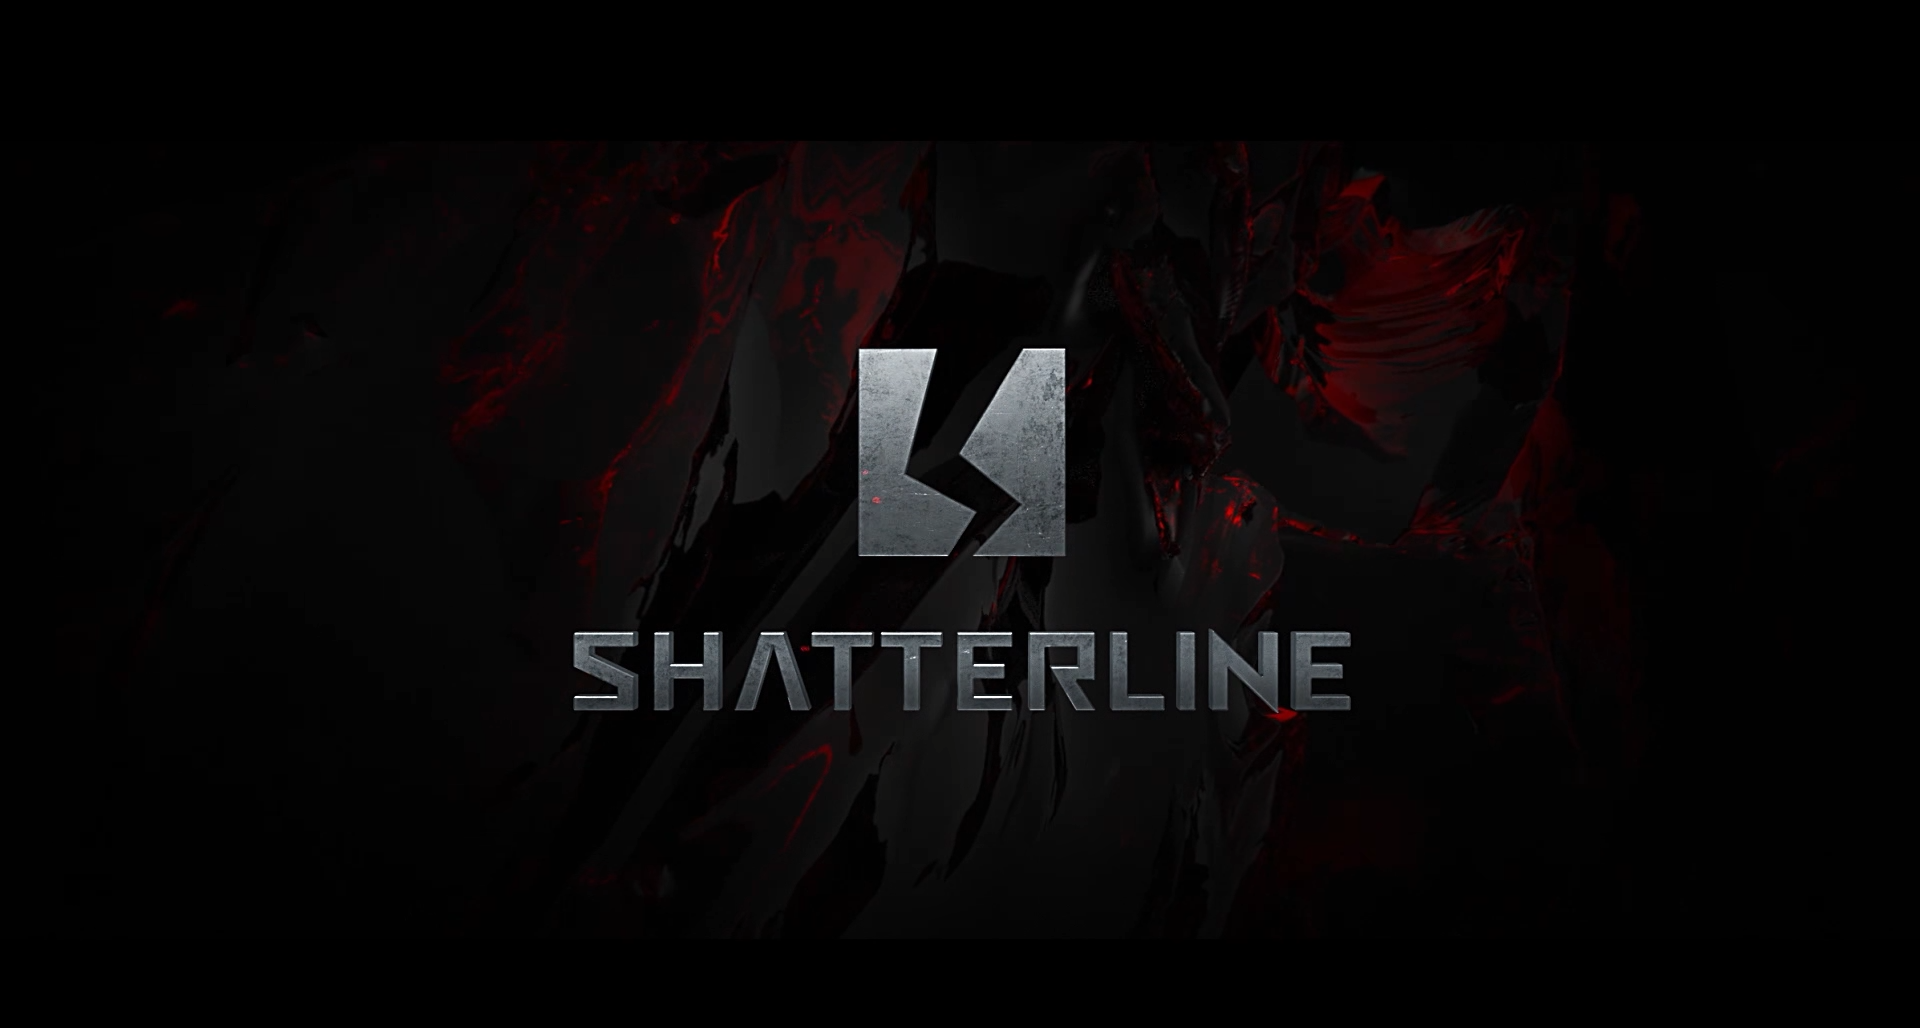 Does Shatterline have skill-based matchmaking? - Dot Esports